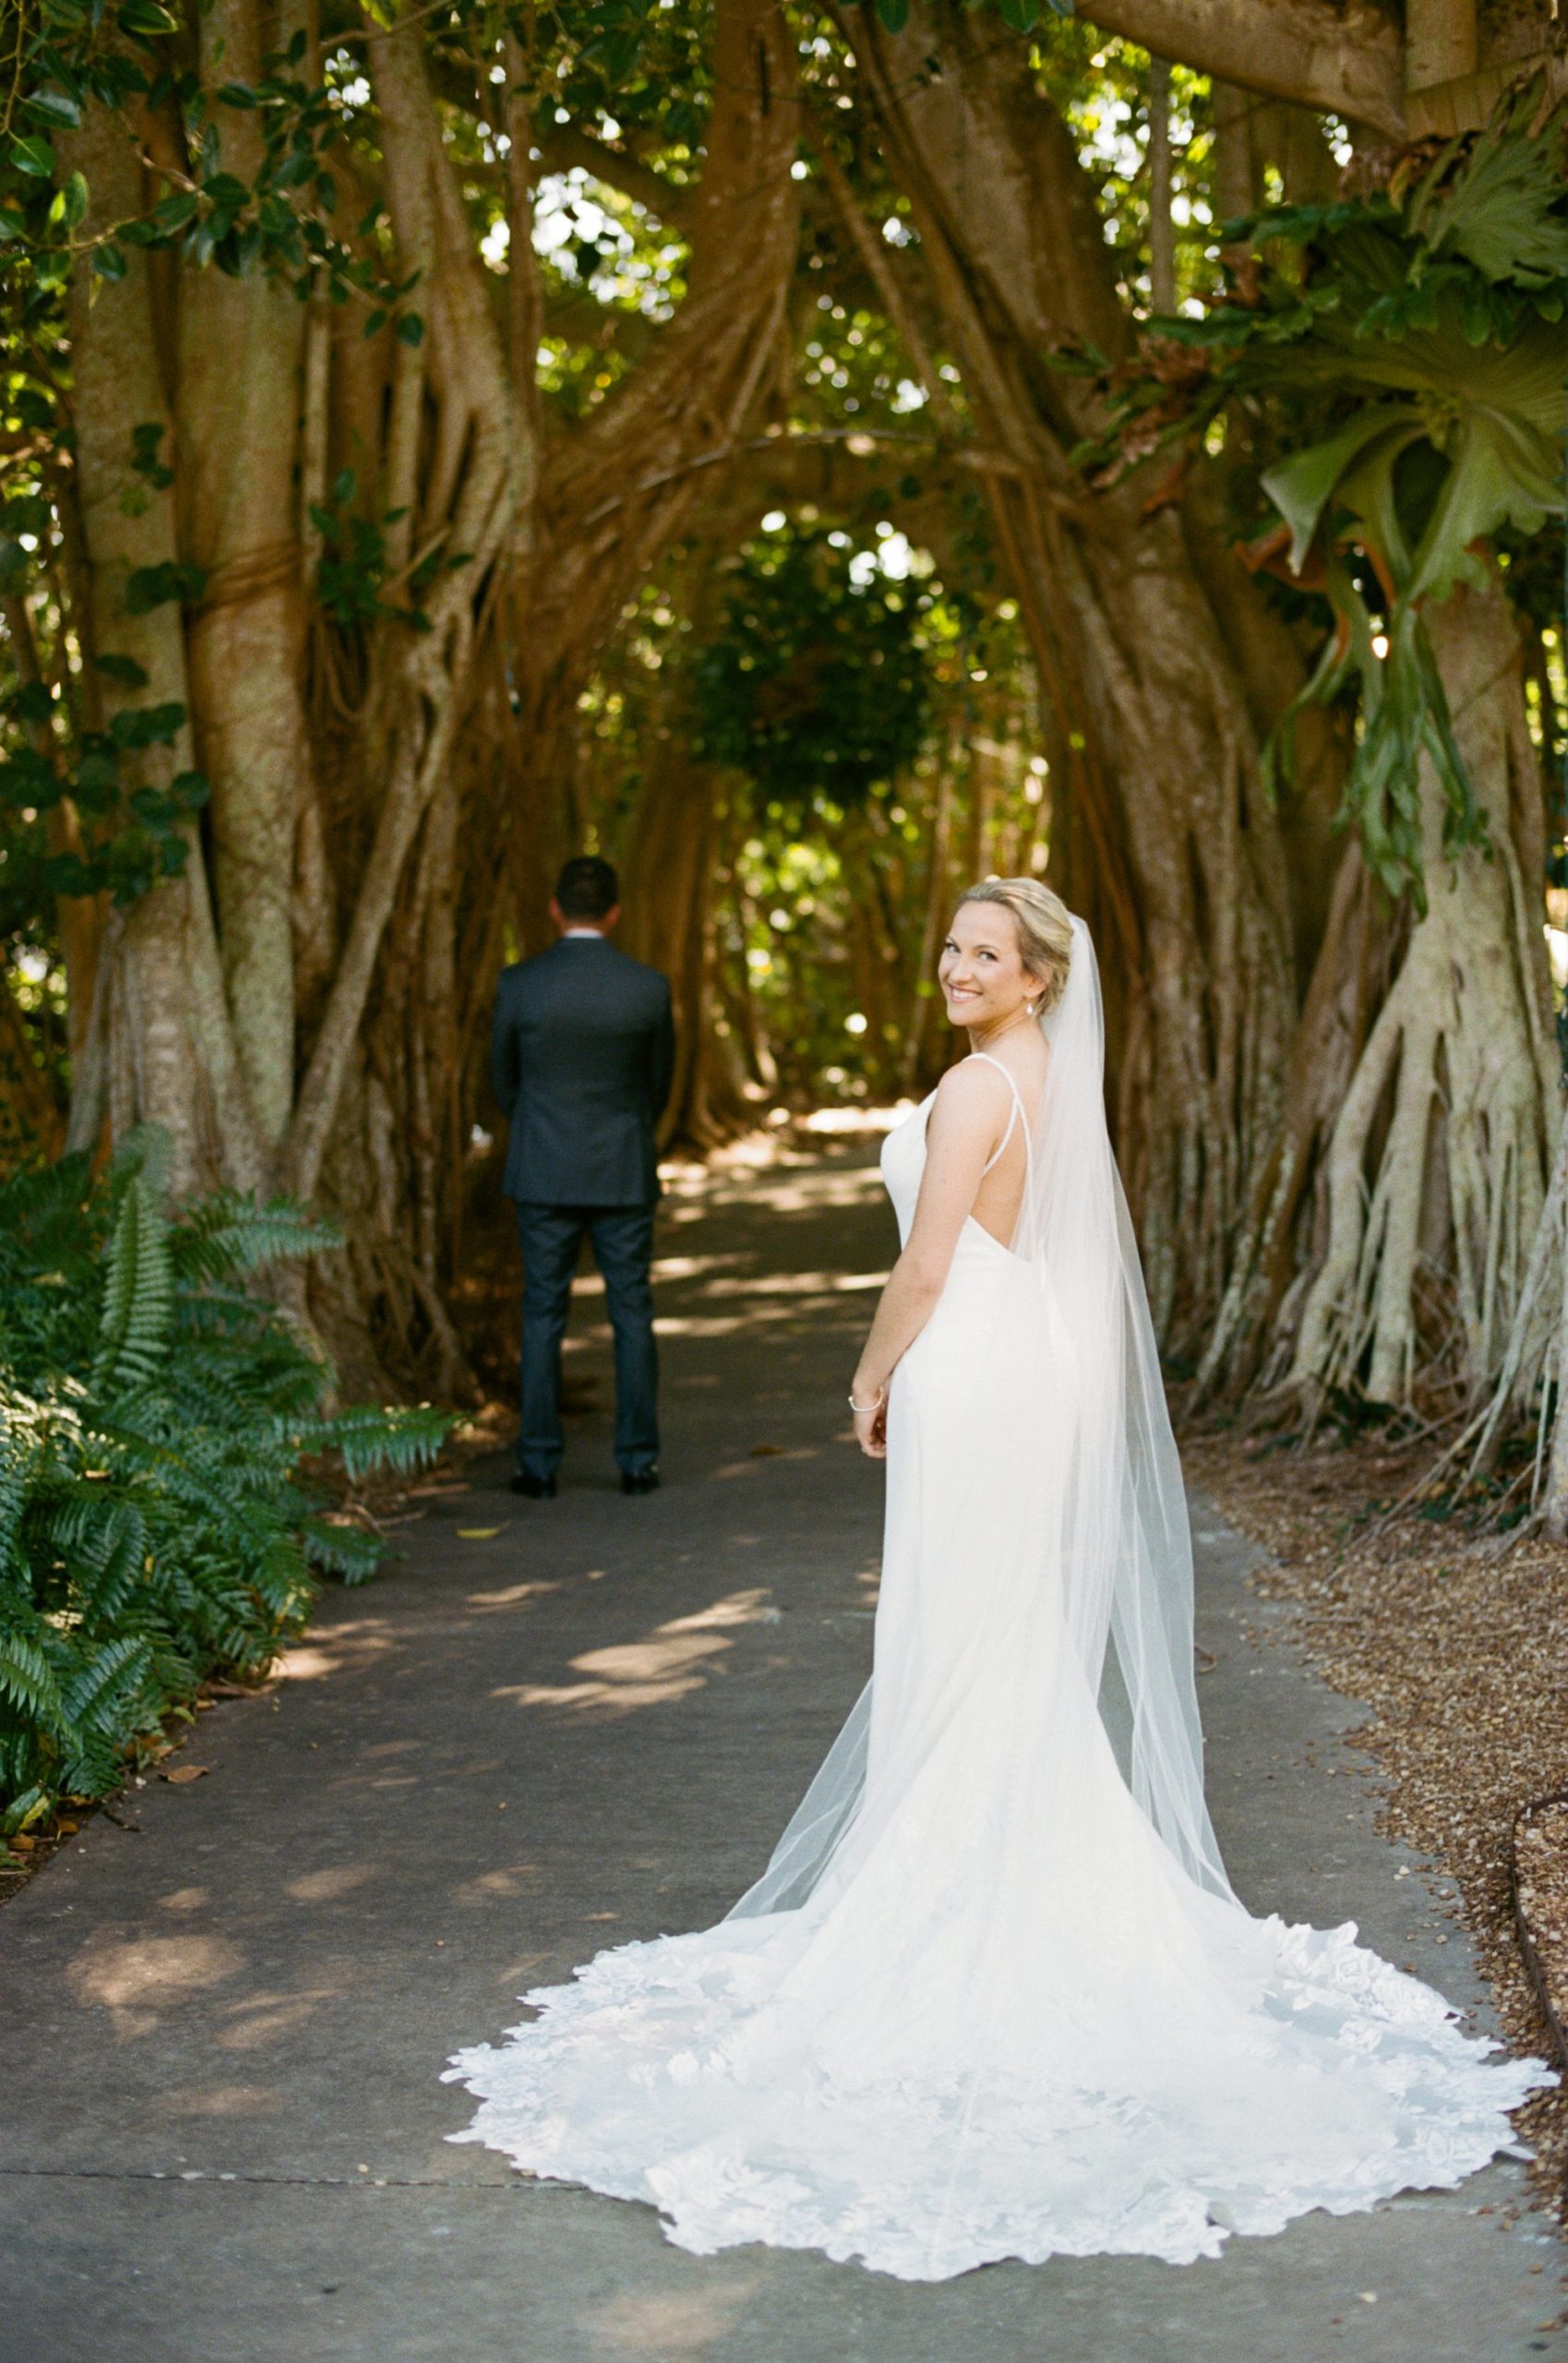 First look at Selby Gardens, Wedding Photos at Selby Gardens, Marie Selby Botanical Gardens wedding photos 